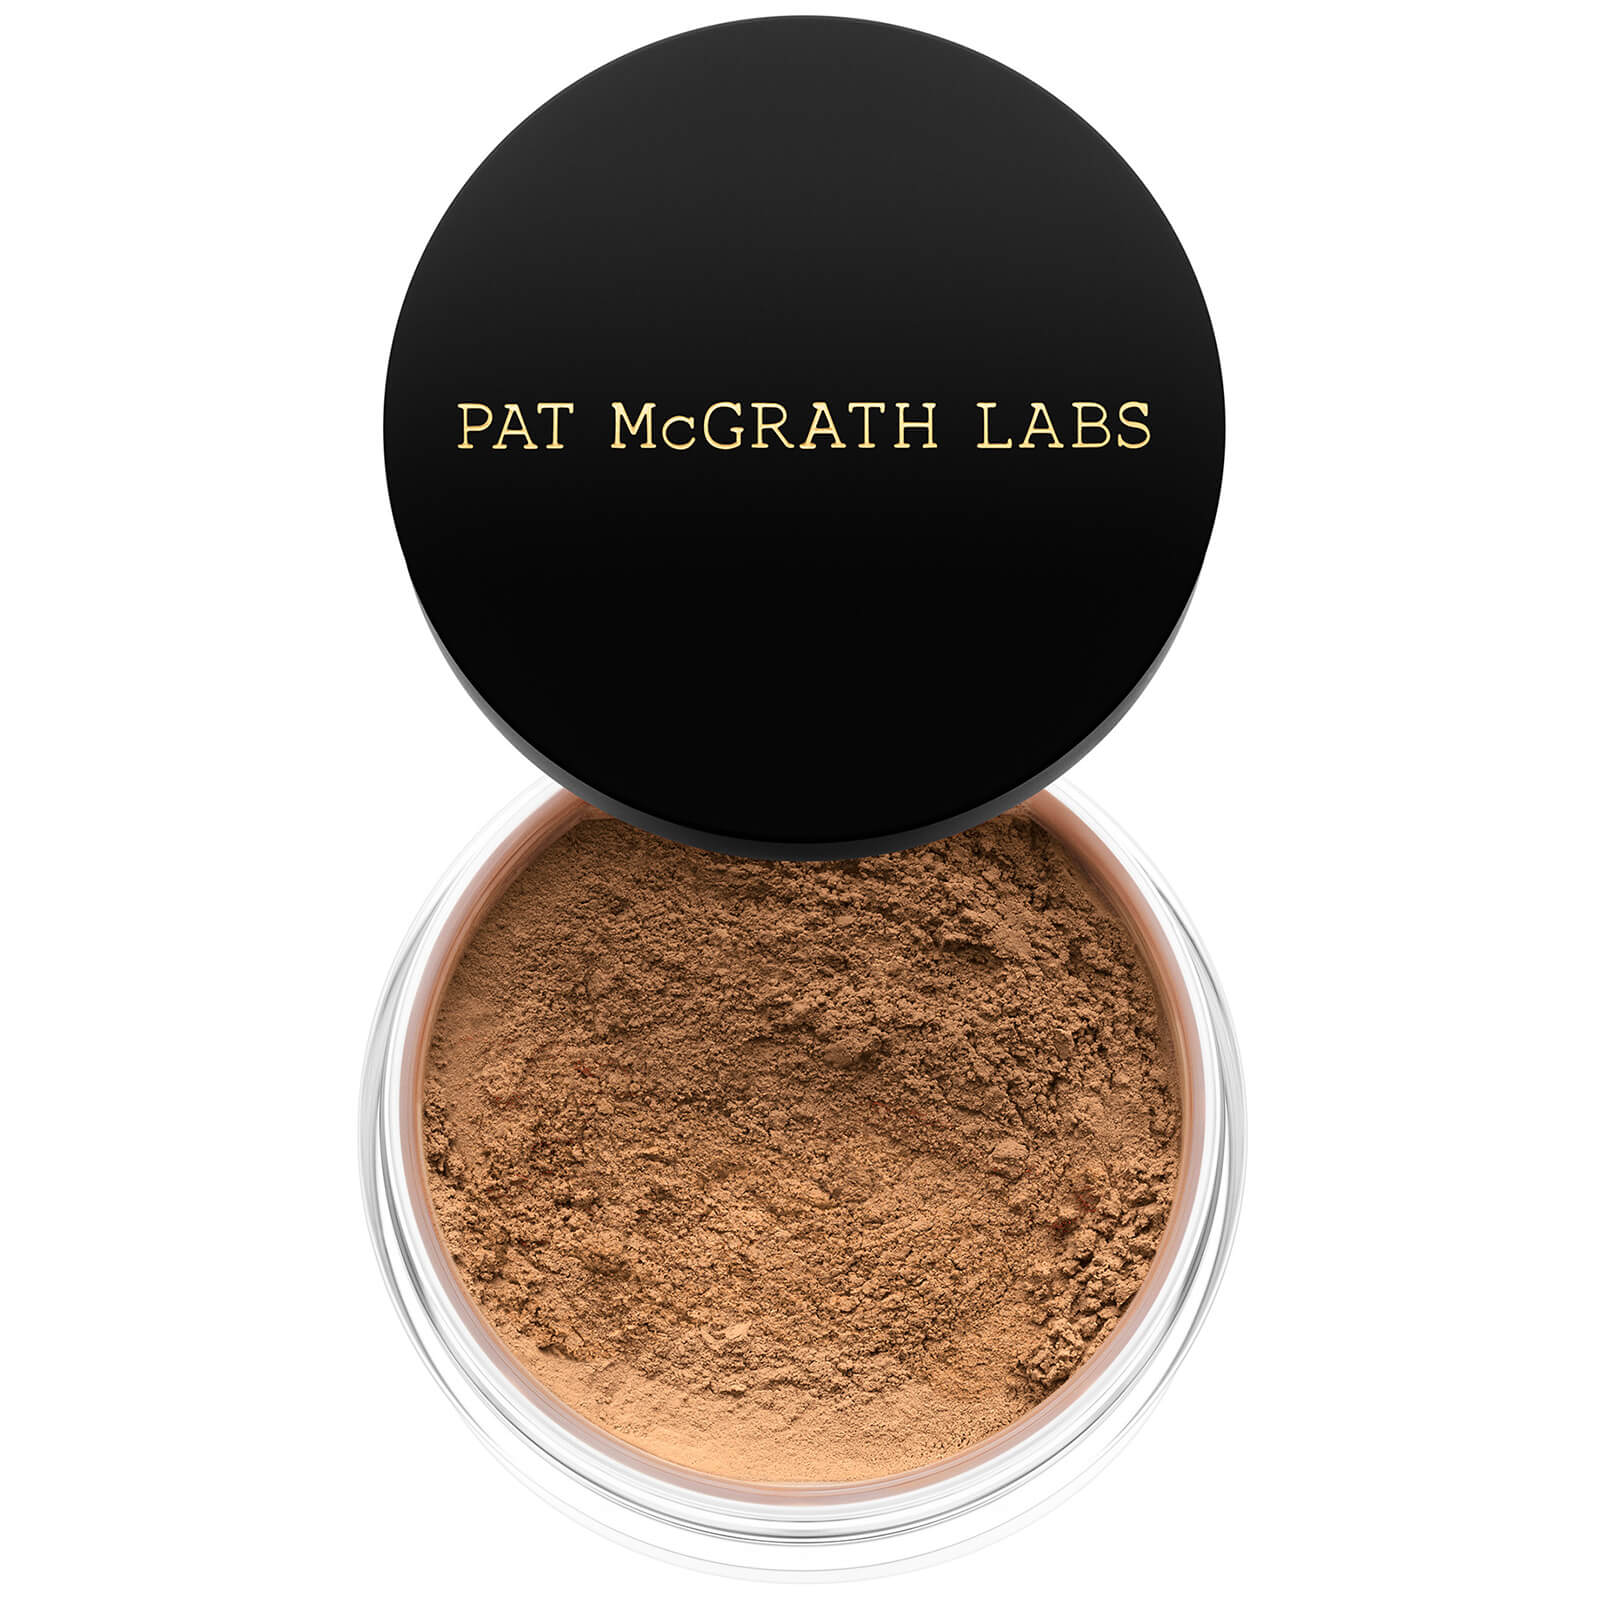 Pat McGrath Labs Skin Fetish: Sublime Perfection Setting Powder 8.5g (Various Shades) - Medium Deep 